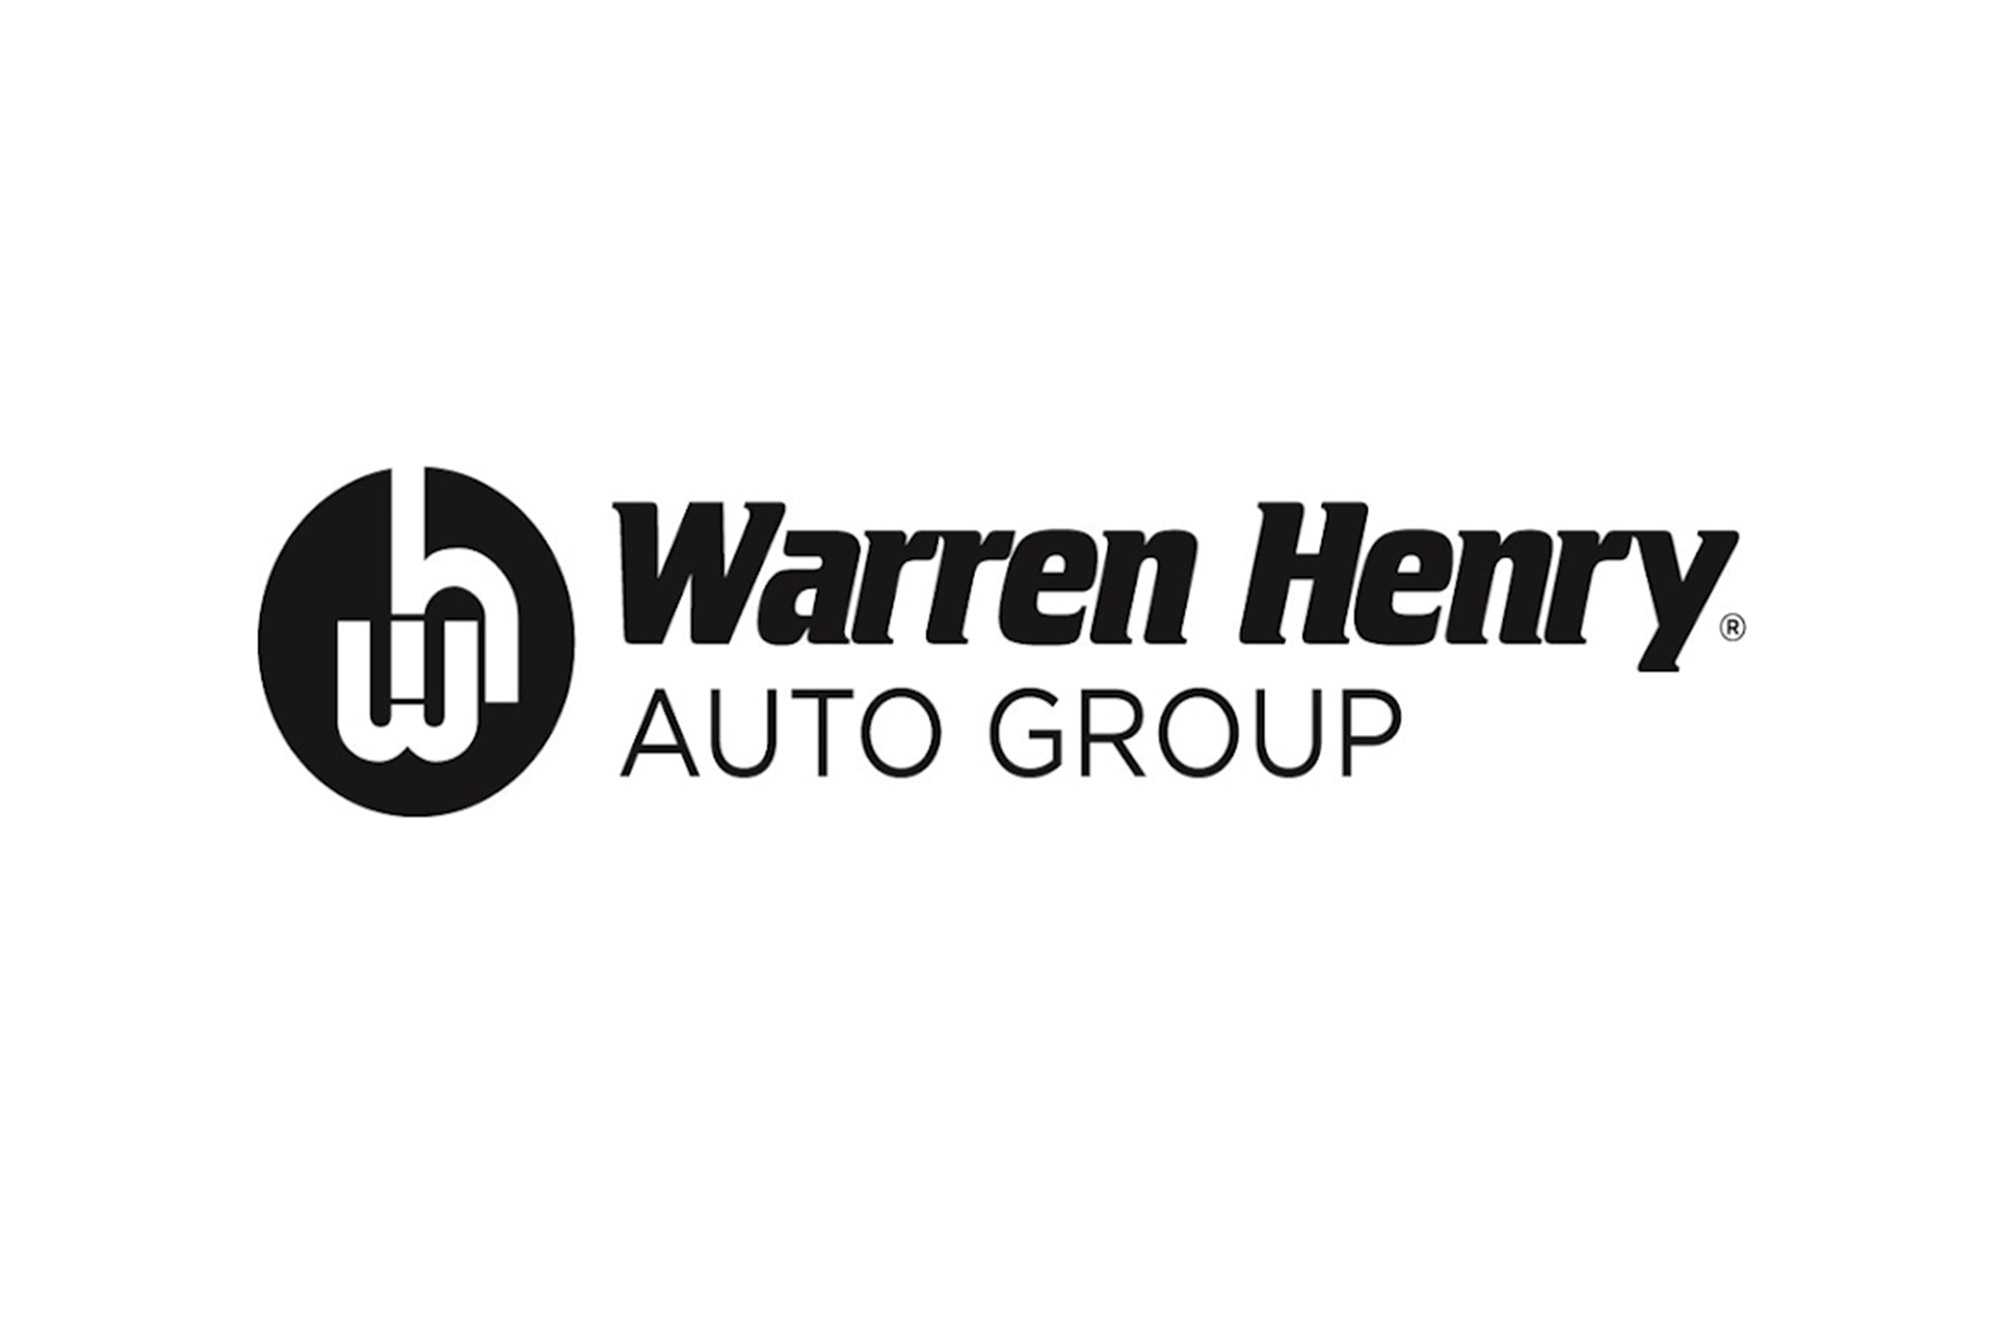 Warren Henry Auto Group logo